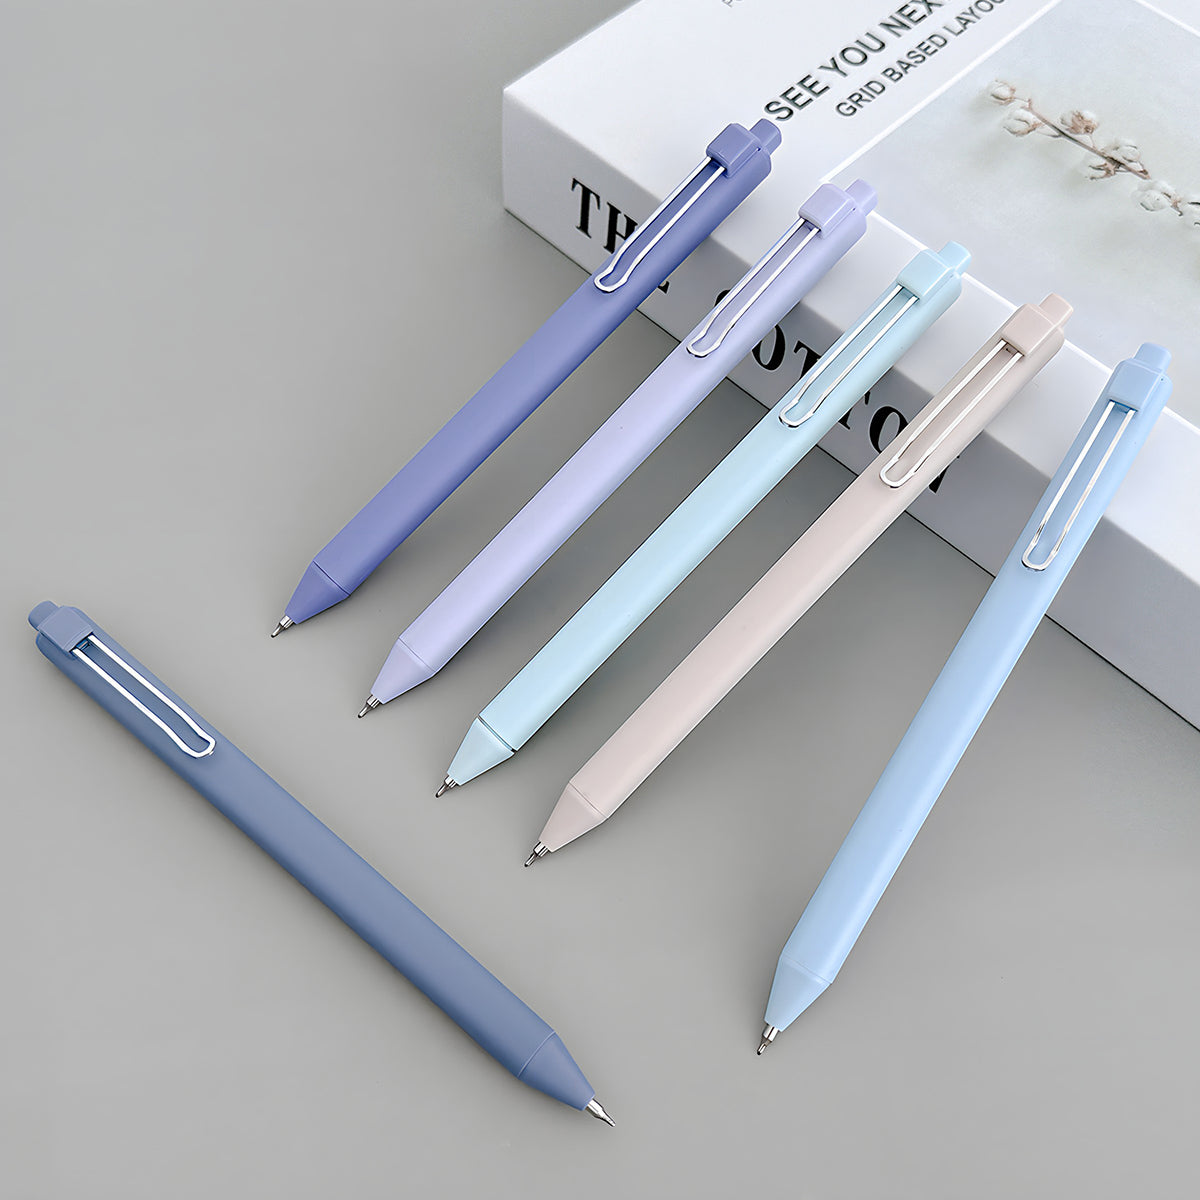 6 PCS Multicolor Pens in One, 0.5mm 6-in-1 Retractable Ballpoint Pens, 6  Colors Transparent Barrel Ballpoint Pen, Office School Supplies Students